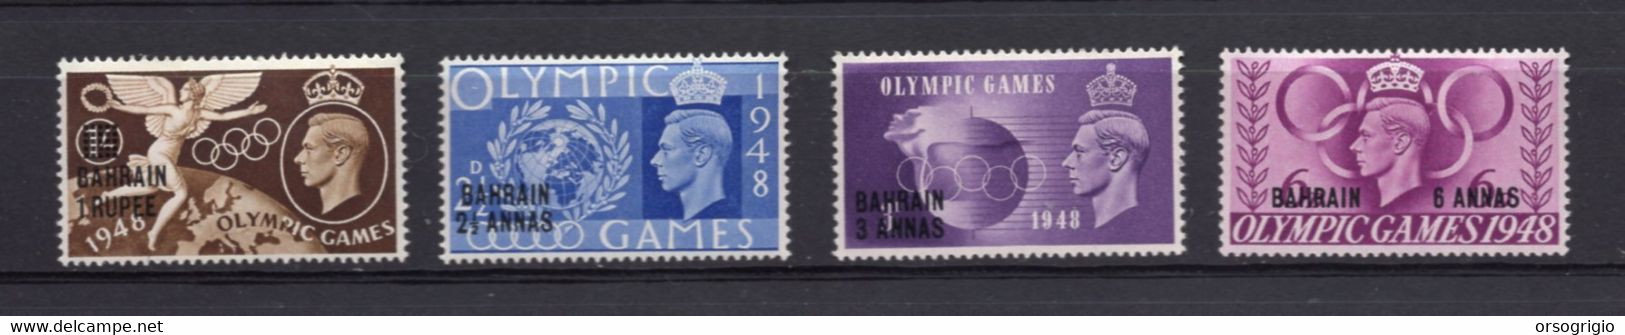 GRAN BRETAGNA - OLYMPIC GAMES - BAHRAIN - Summer 1948: London